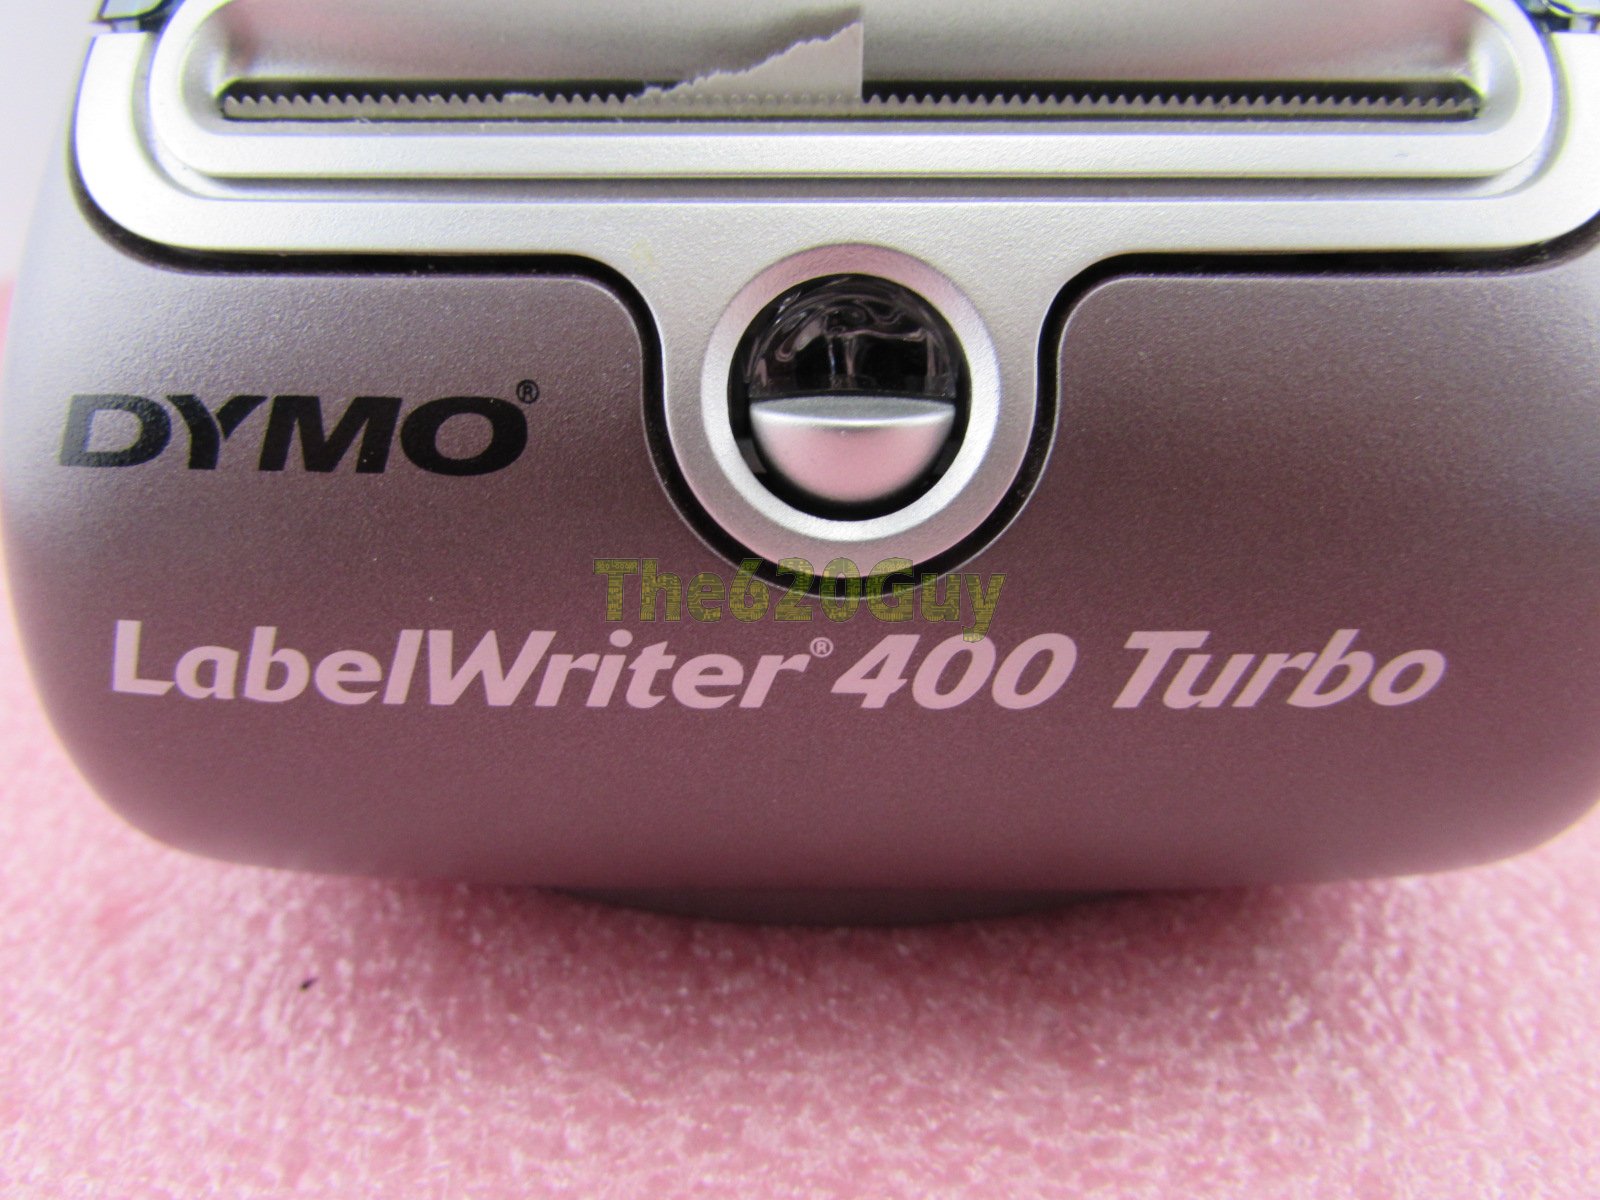 labelwriter 400 turbo driver windows 10